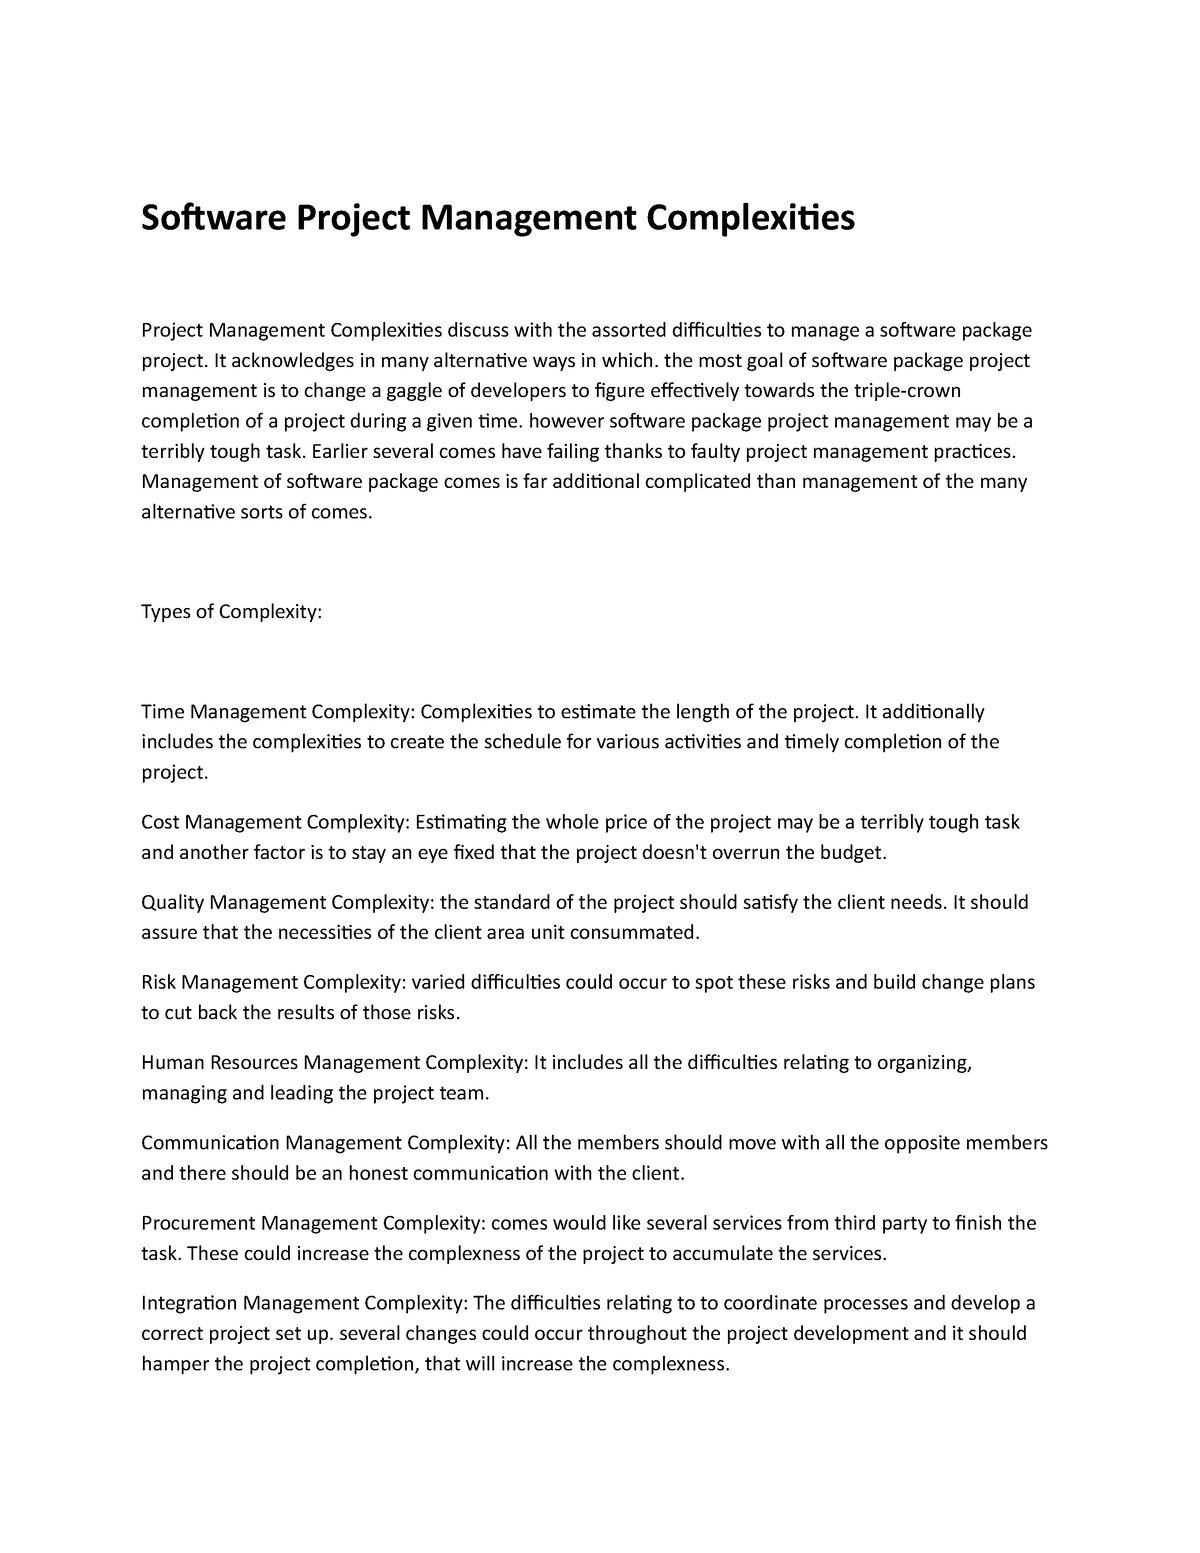 essay on management software